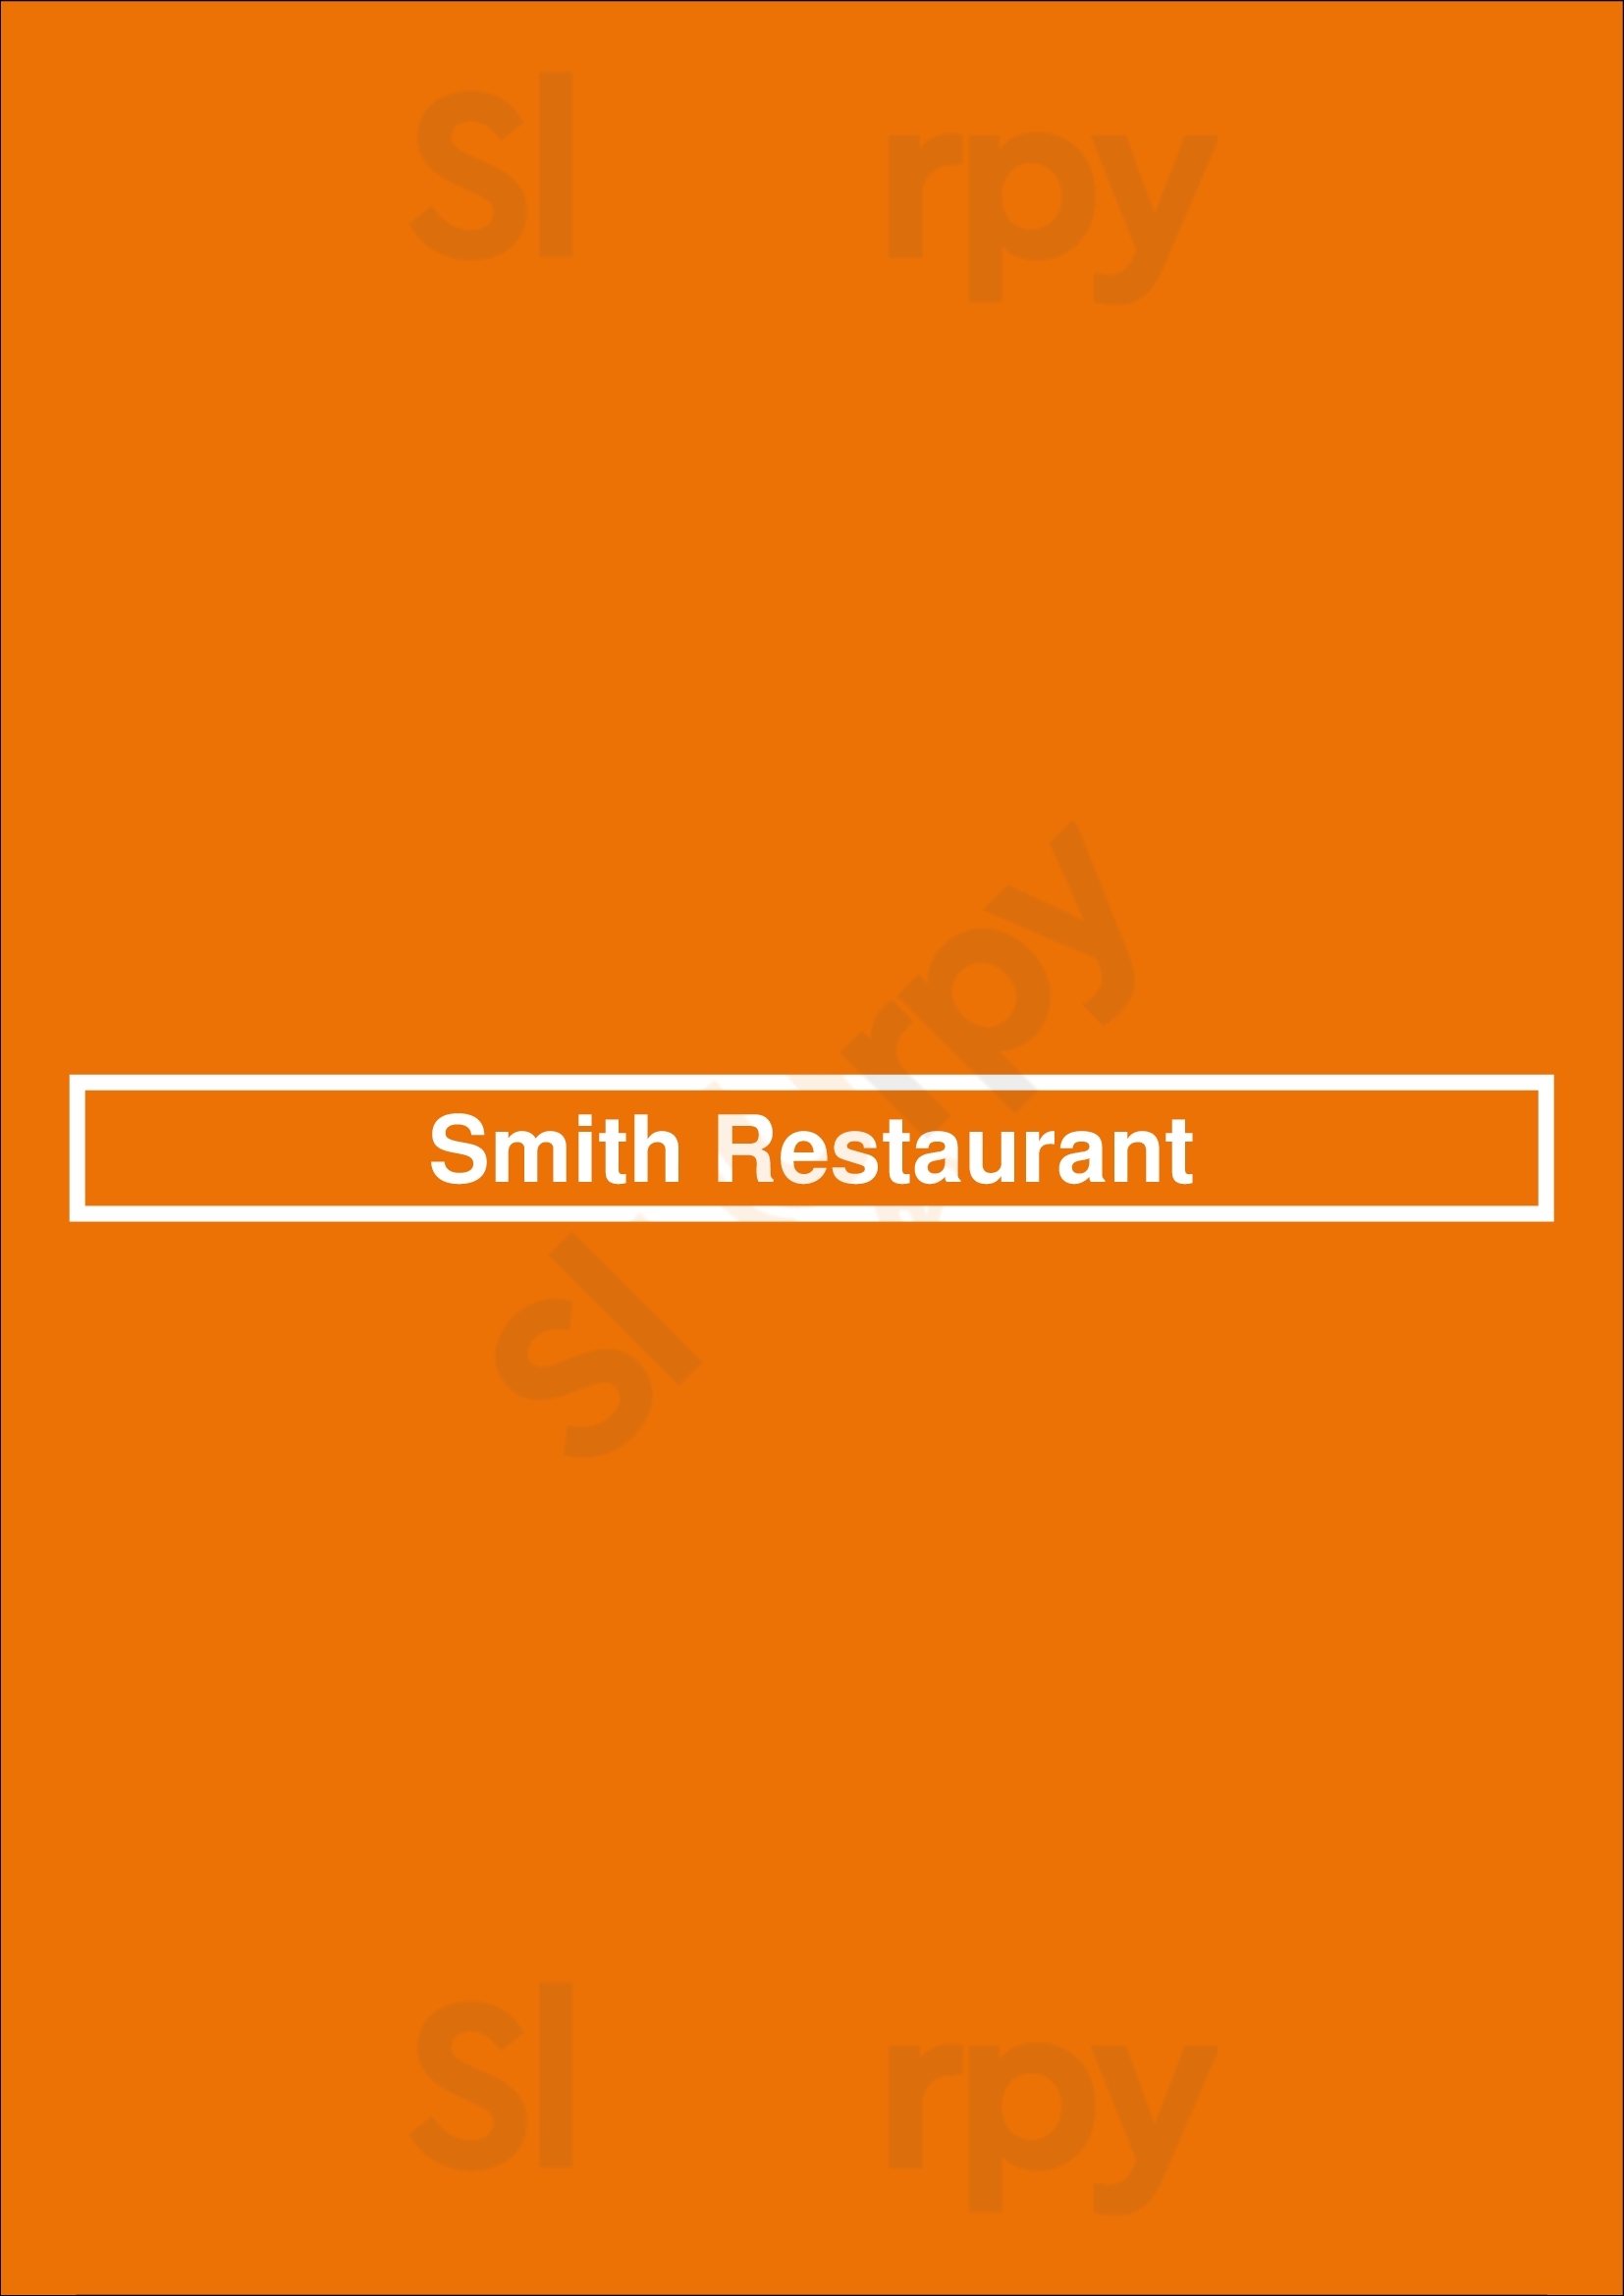 Smith Restaurant Winnipeg Menu - 1